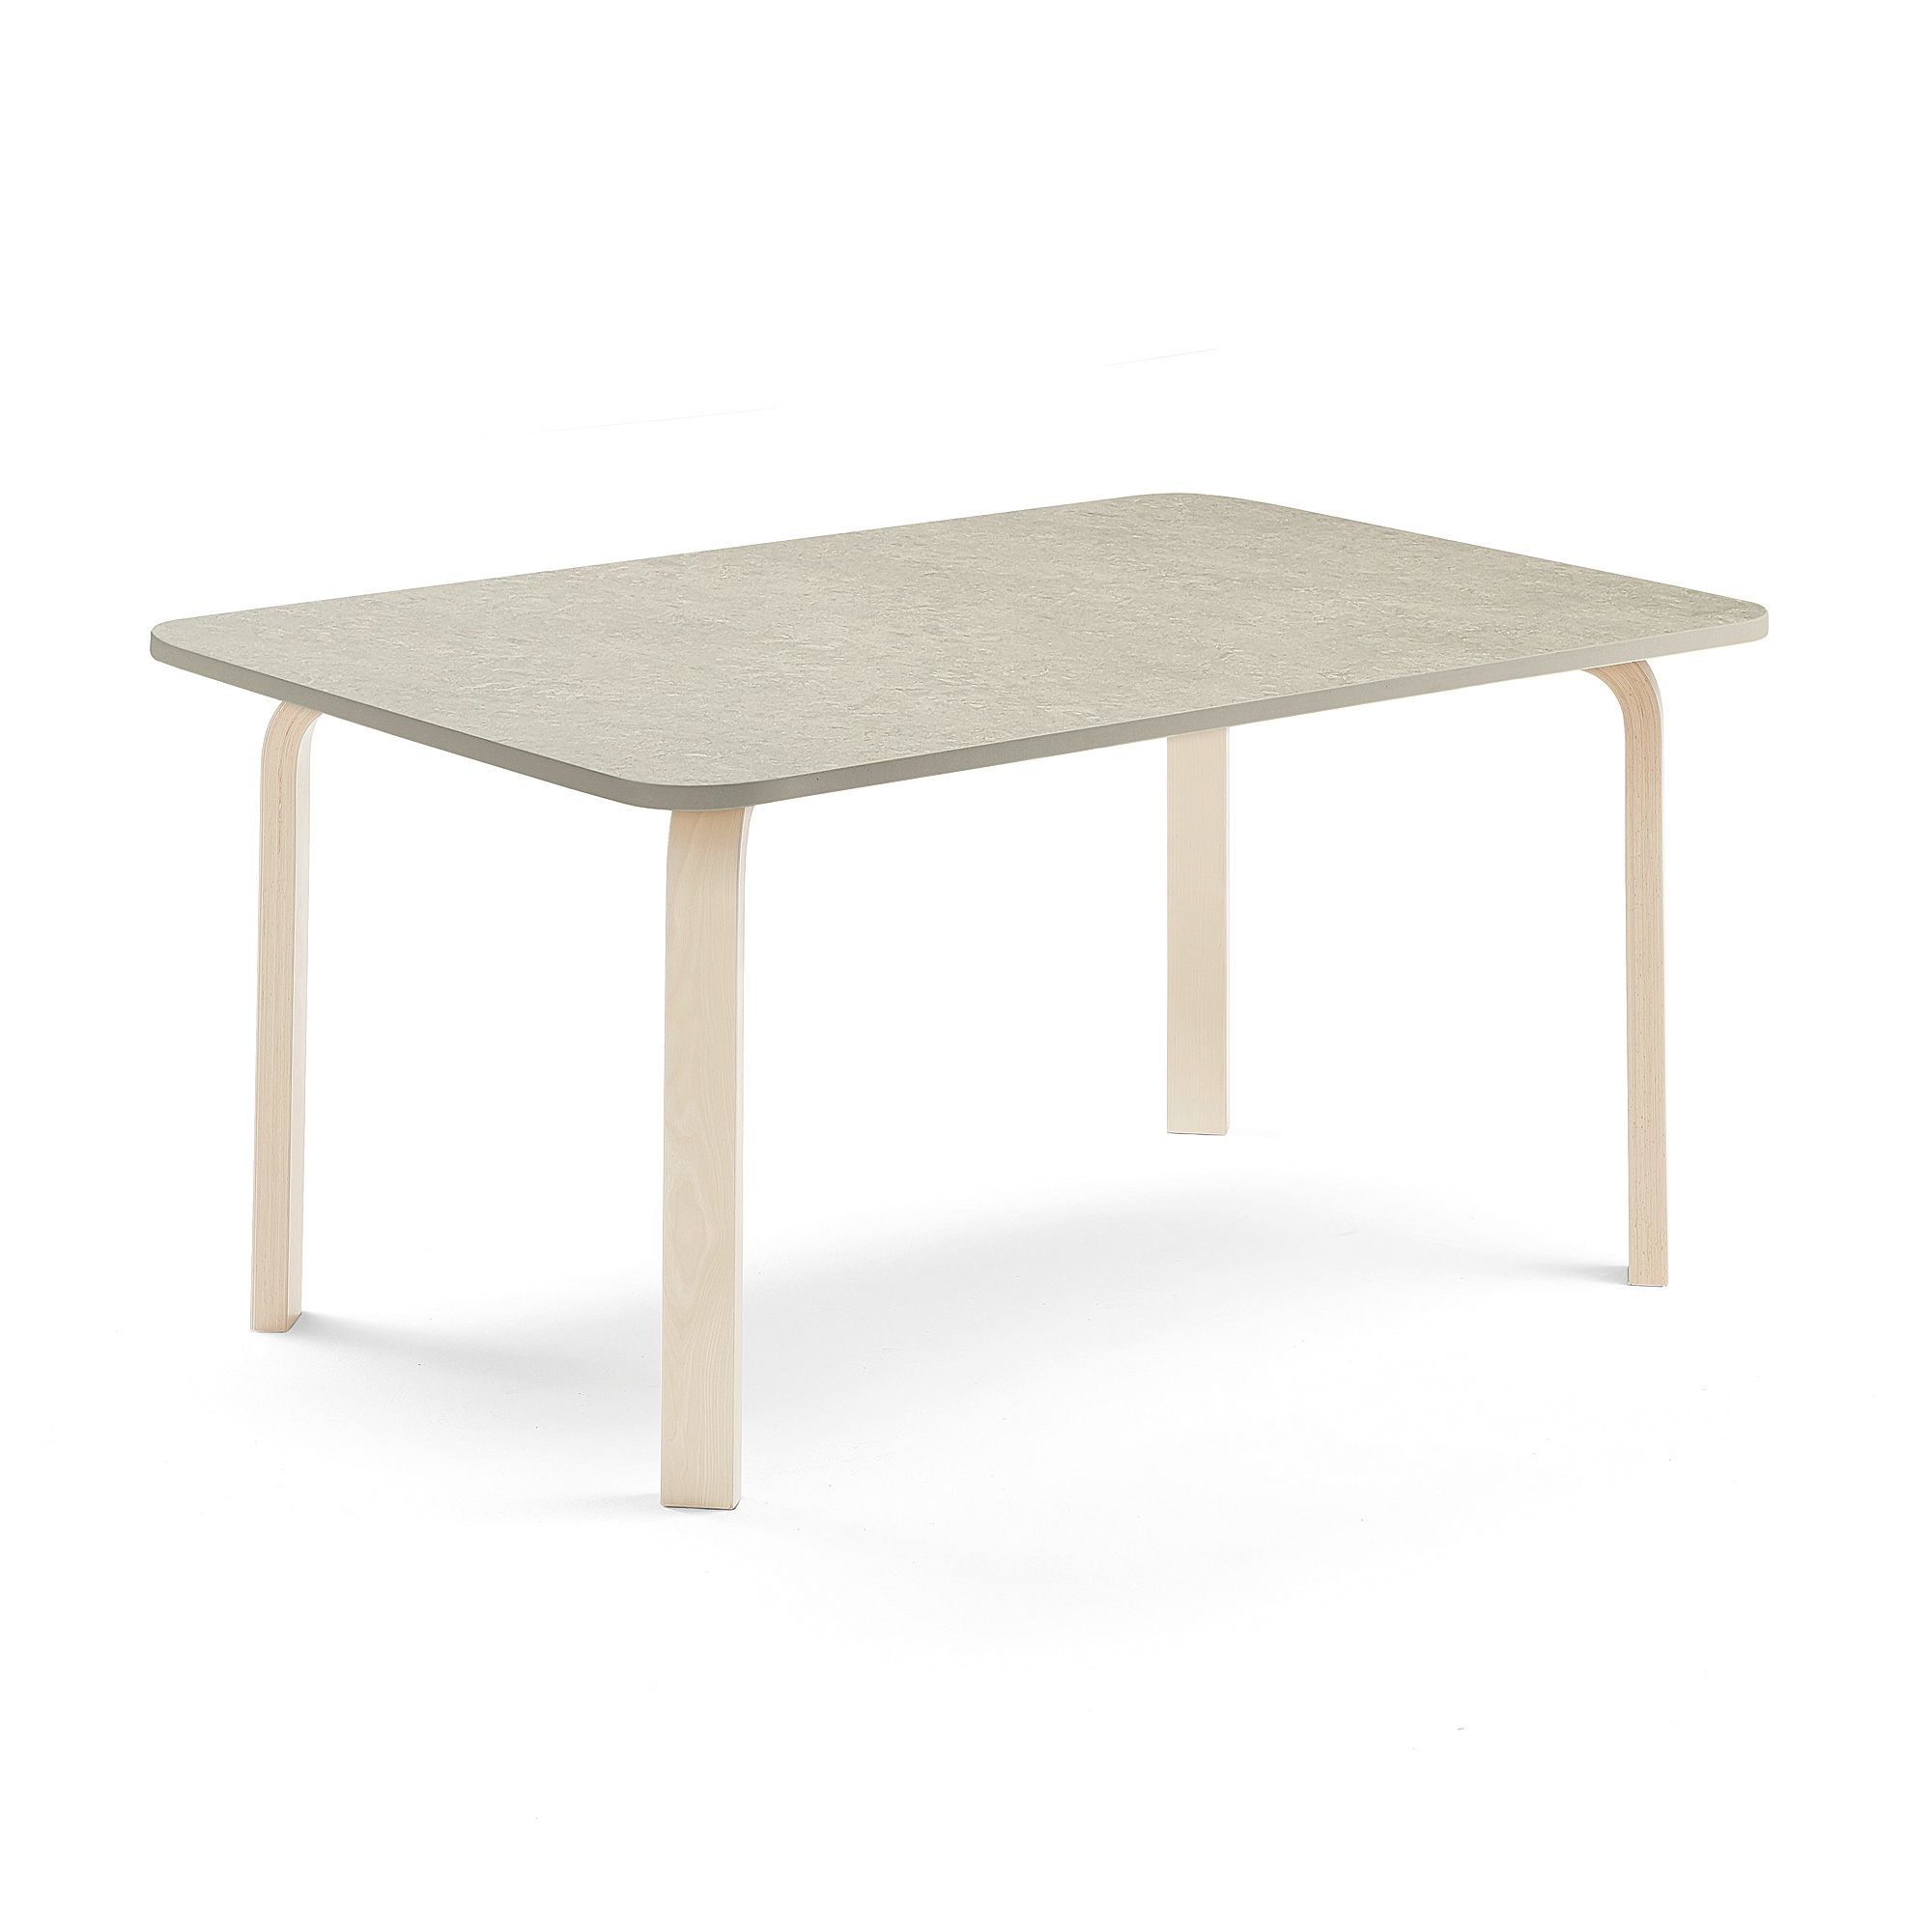 Stůl ELTON, 1400x700x590 mm, bříza, akustické linoleum, šedá